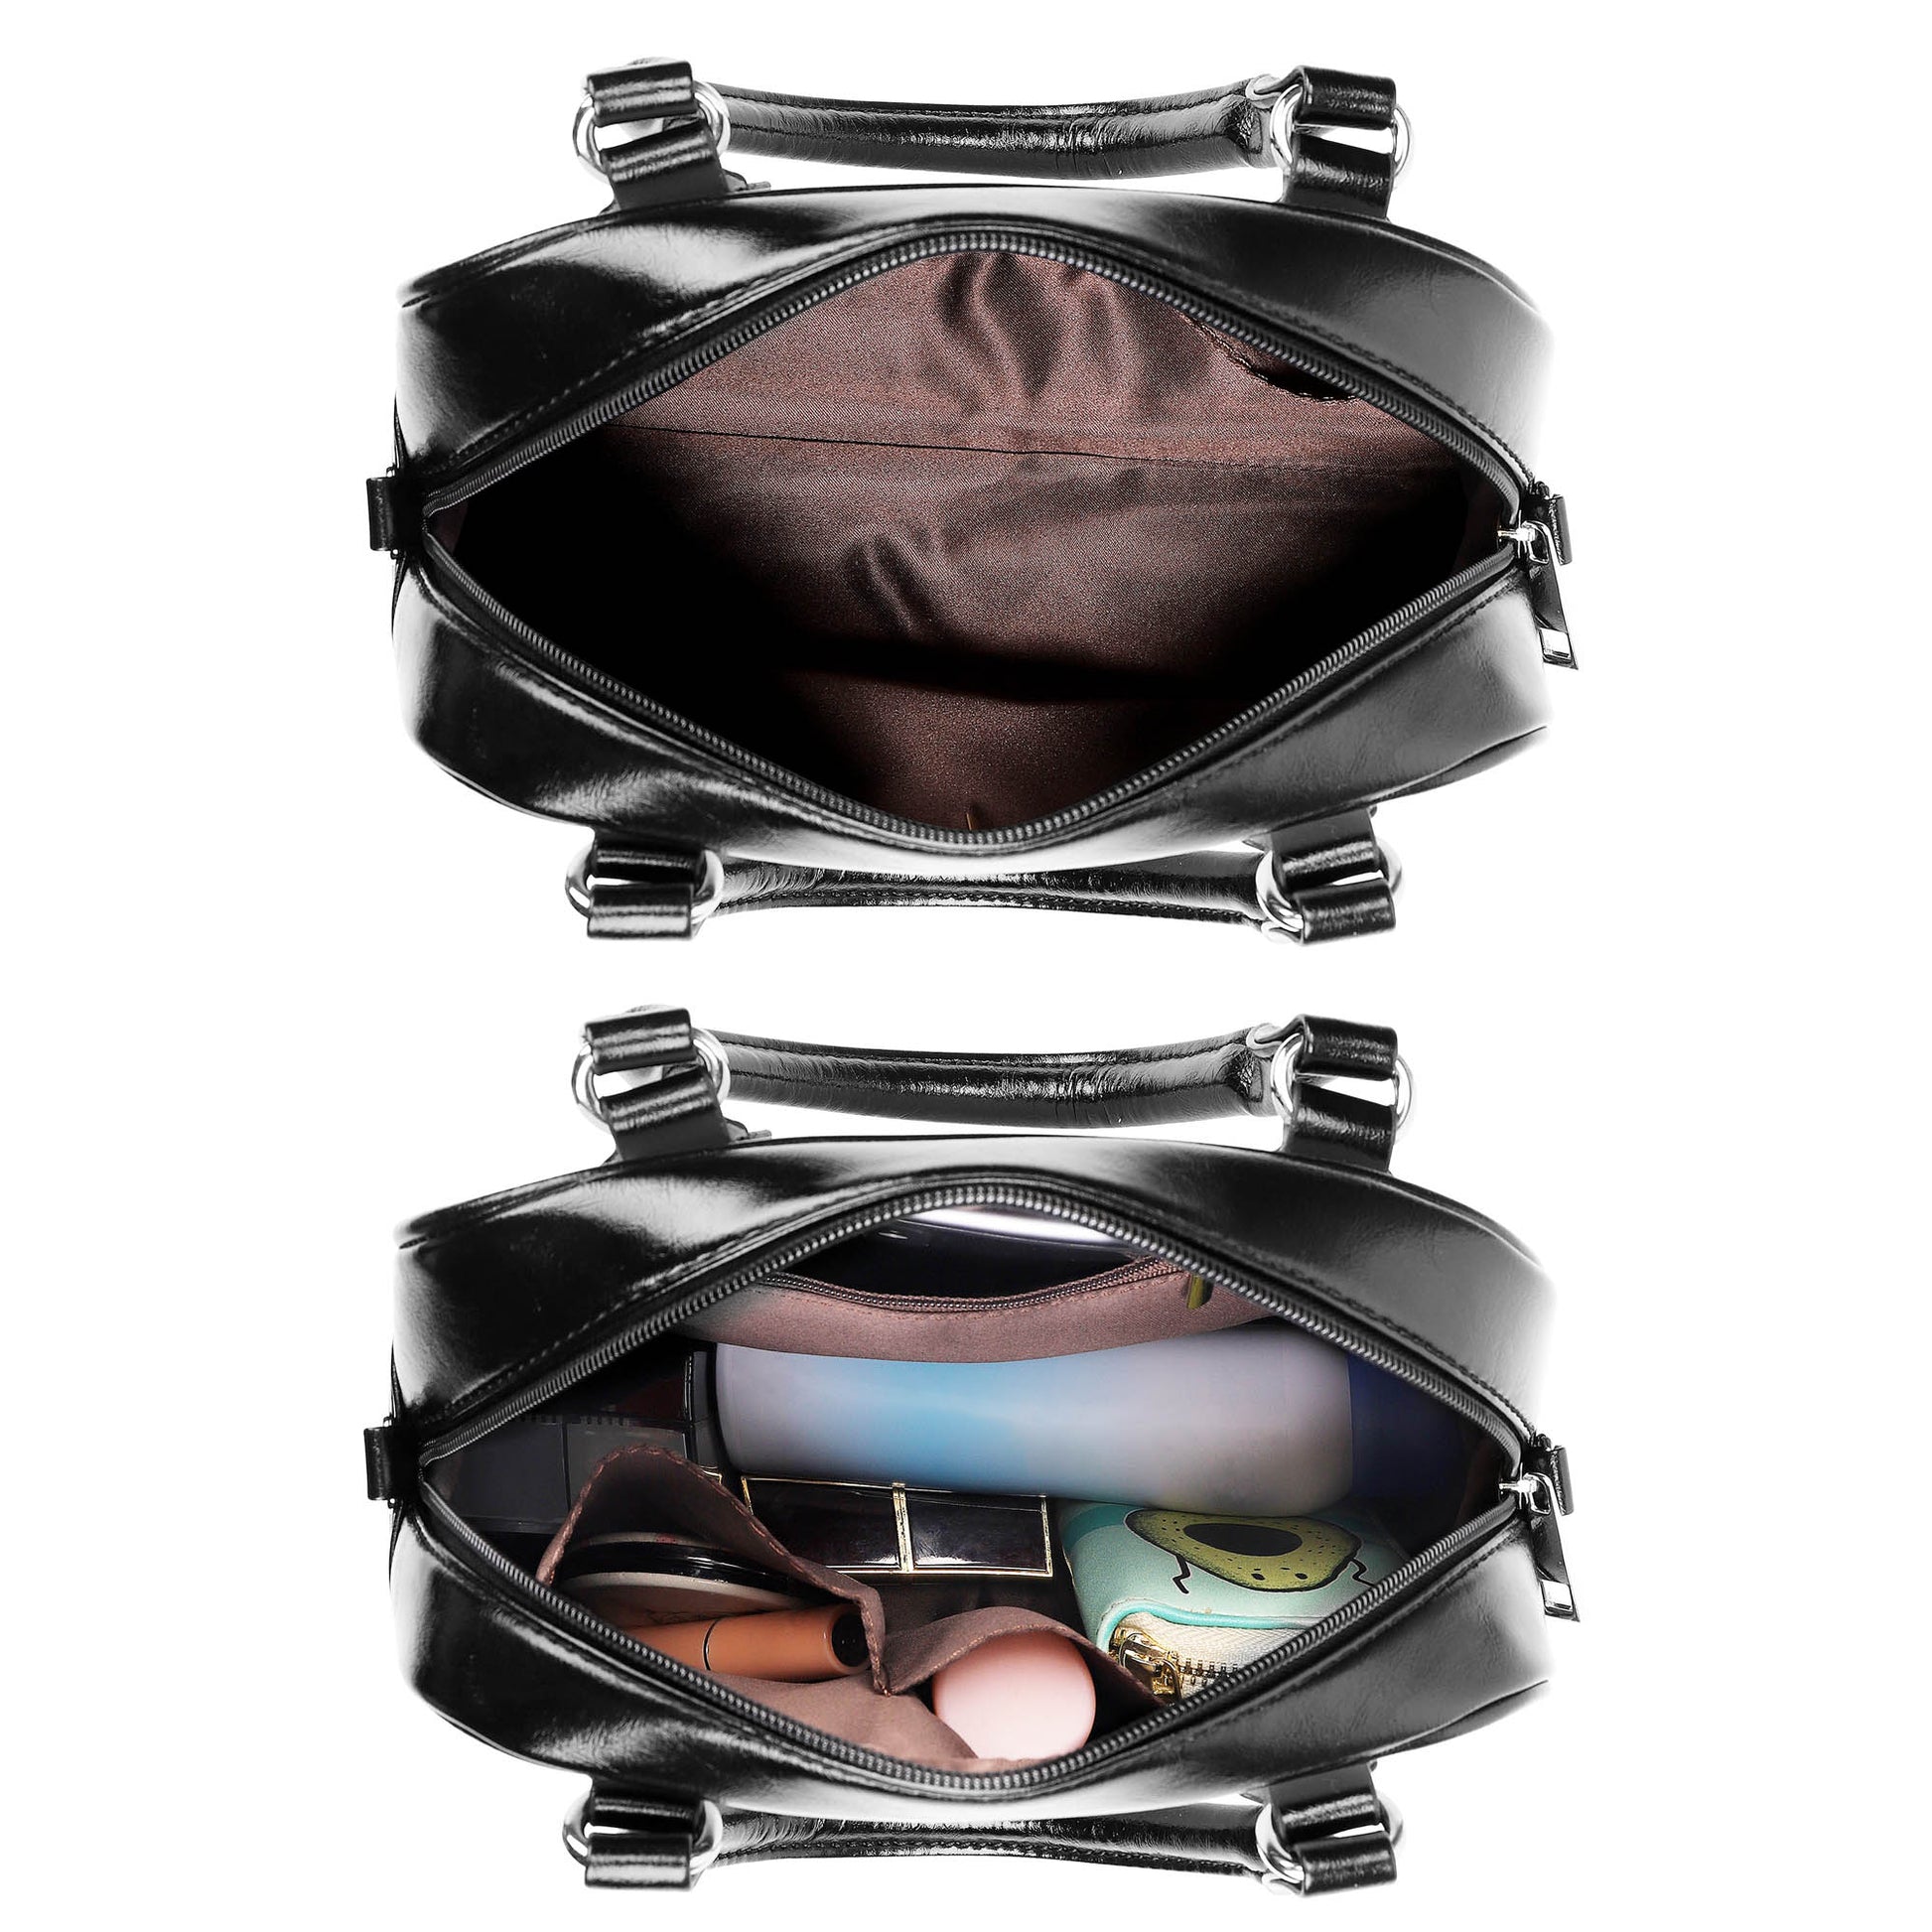 Chattan Tartan Shoulder Handbags - Tartanvibesclothing